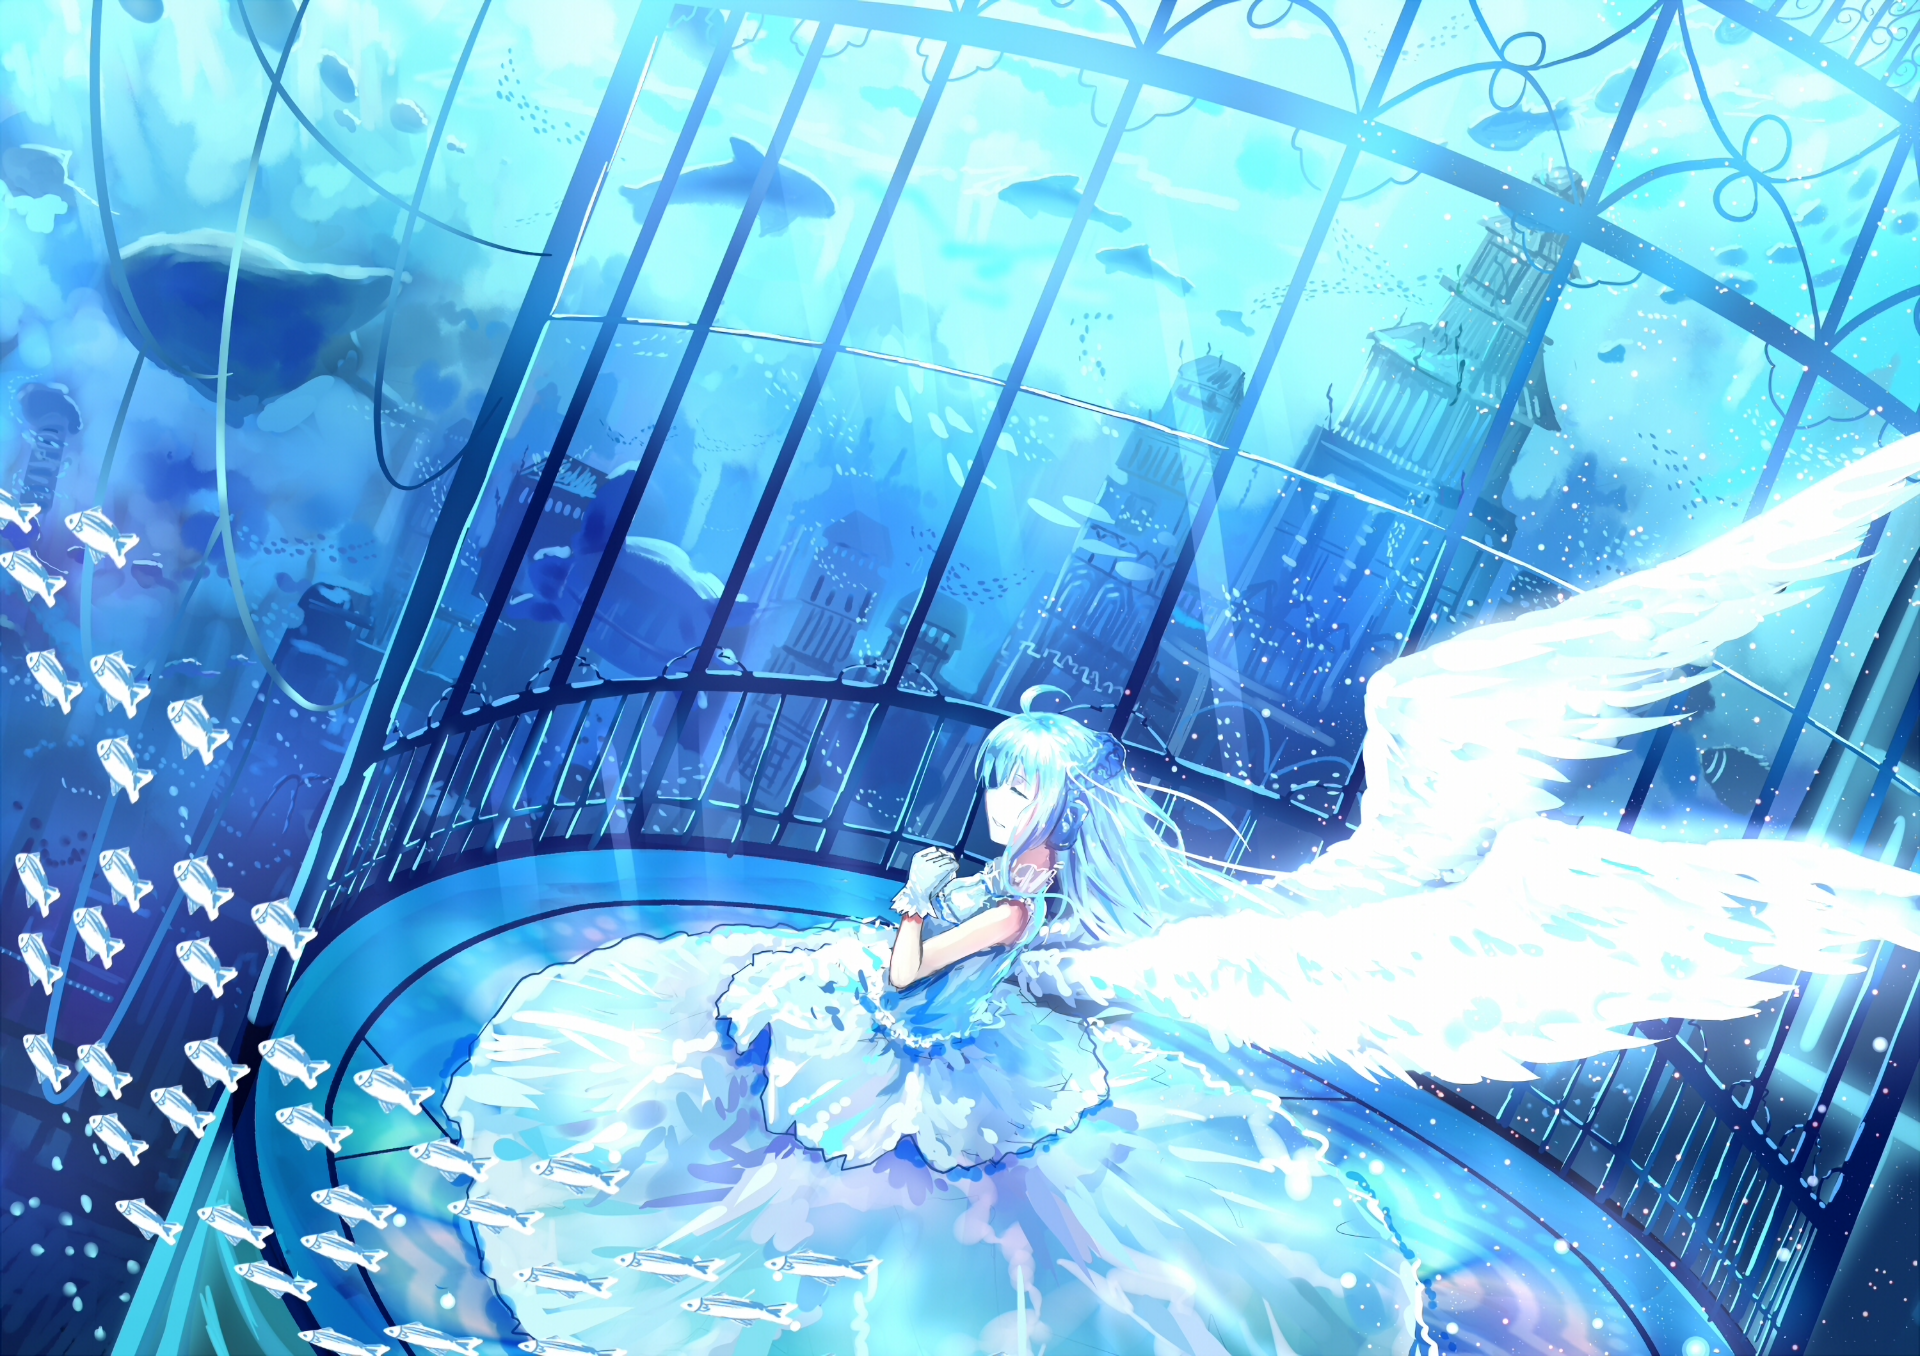 Blue angel by Tangjinhang